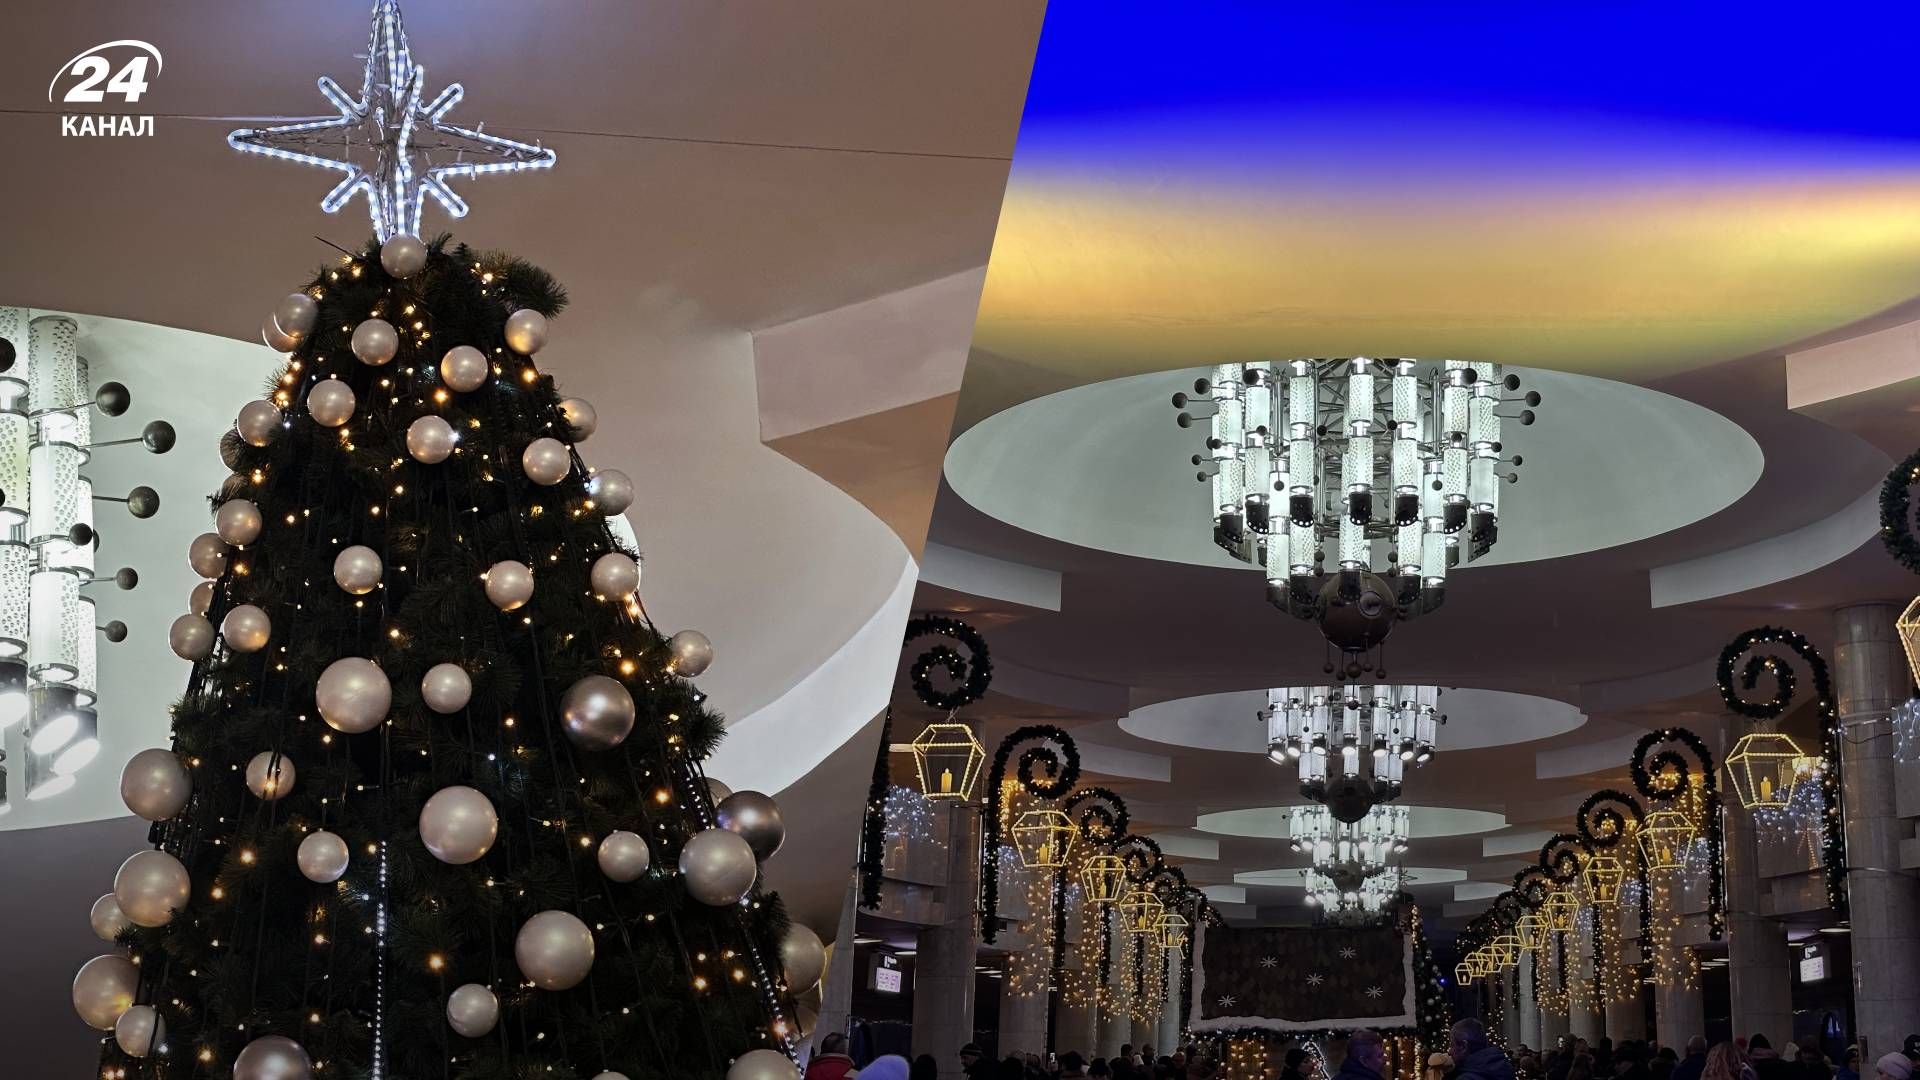 В Харькове установили рождественскую елку в метро - фото, видео